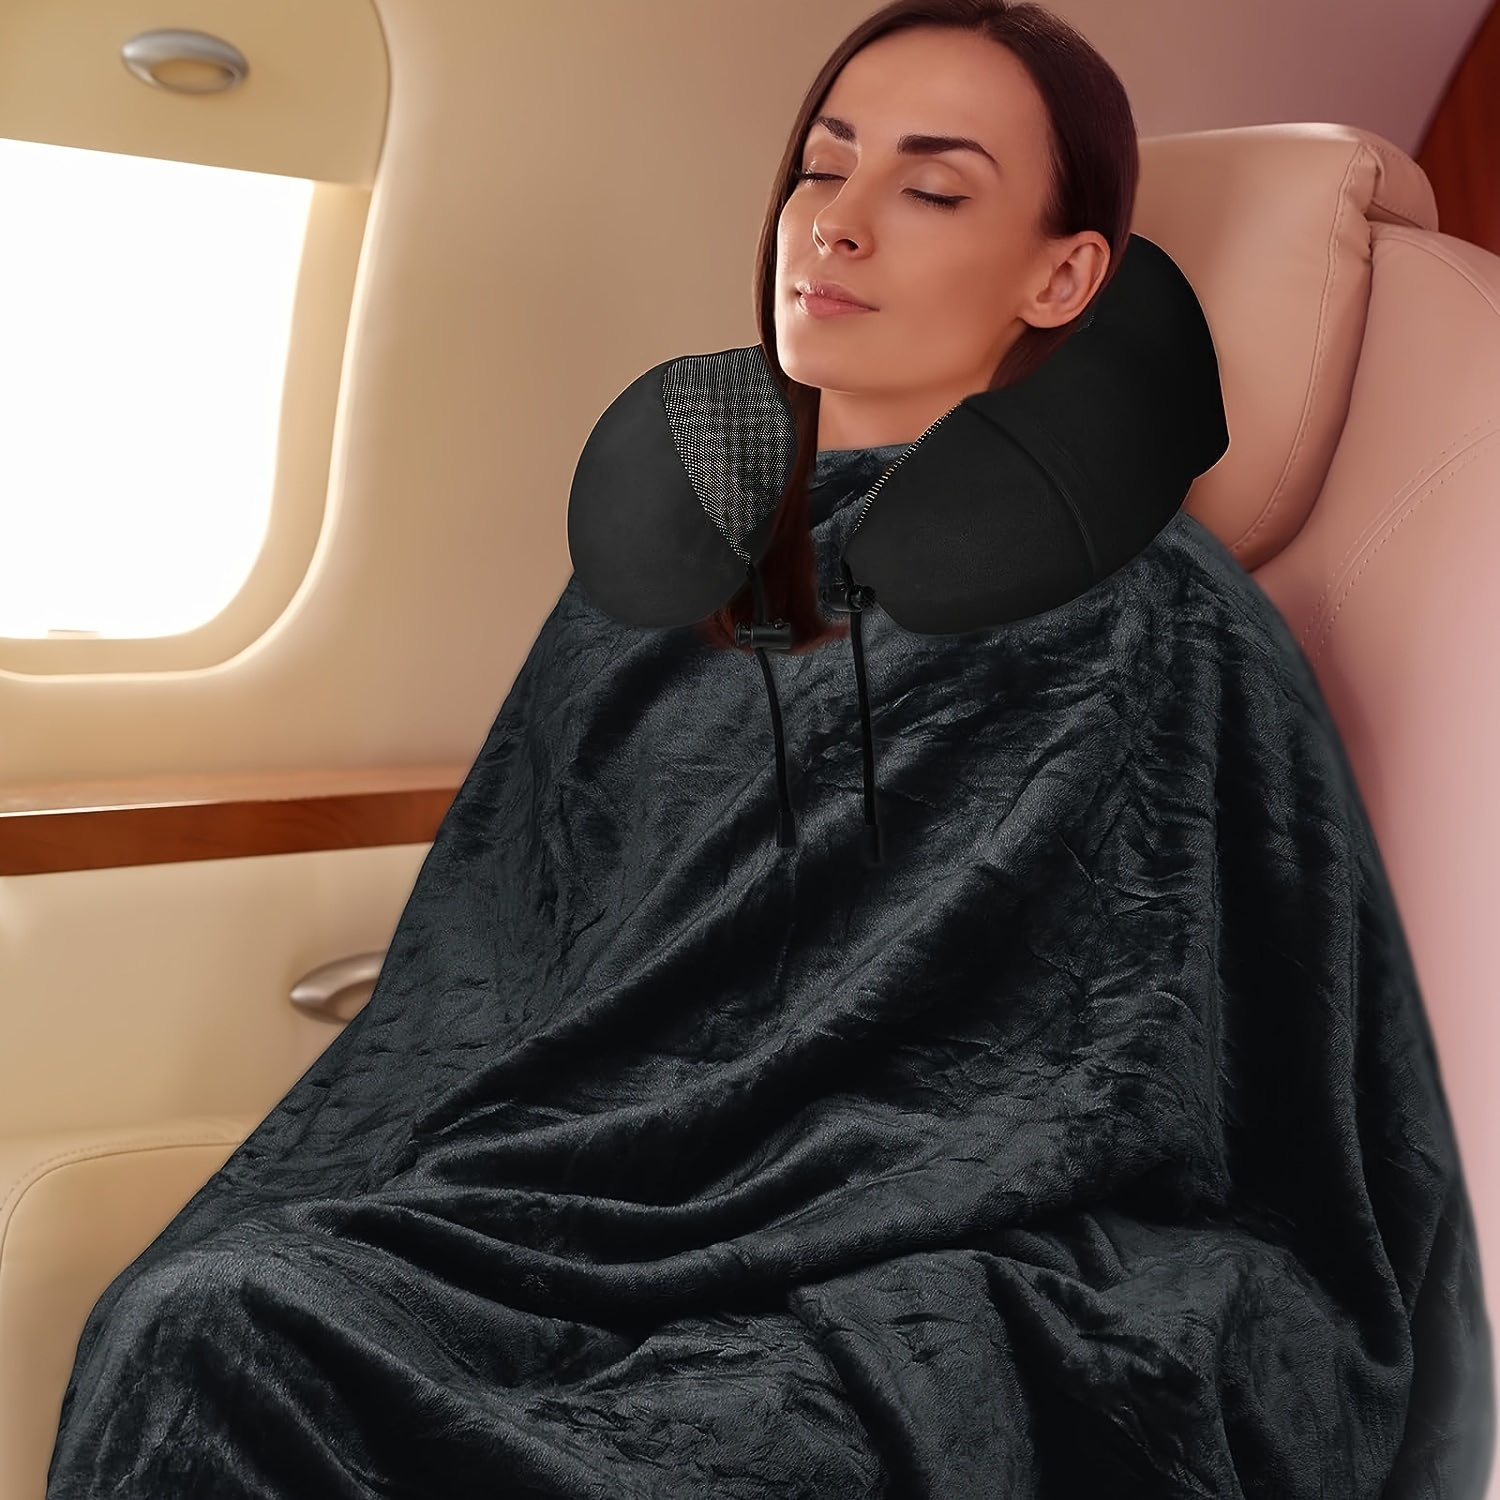 Travel Neck Pillow Non-Deformed Airplane, Pillow Travel Neck